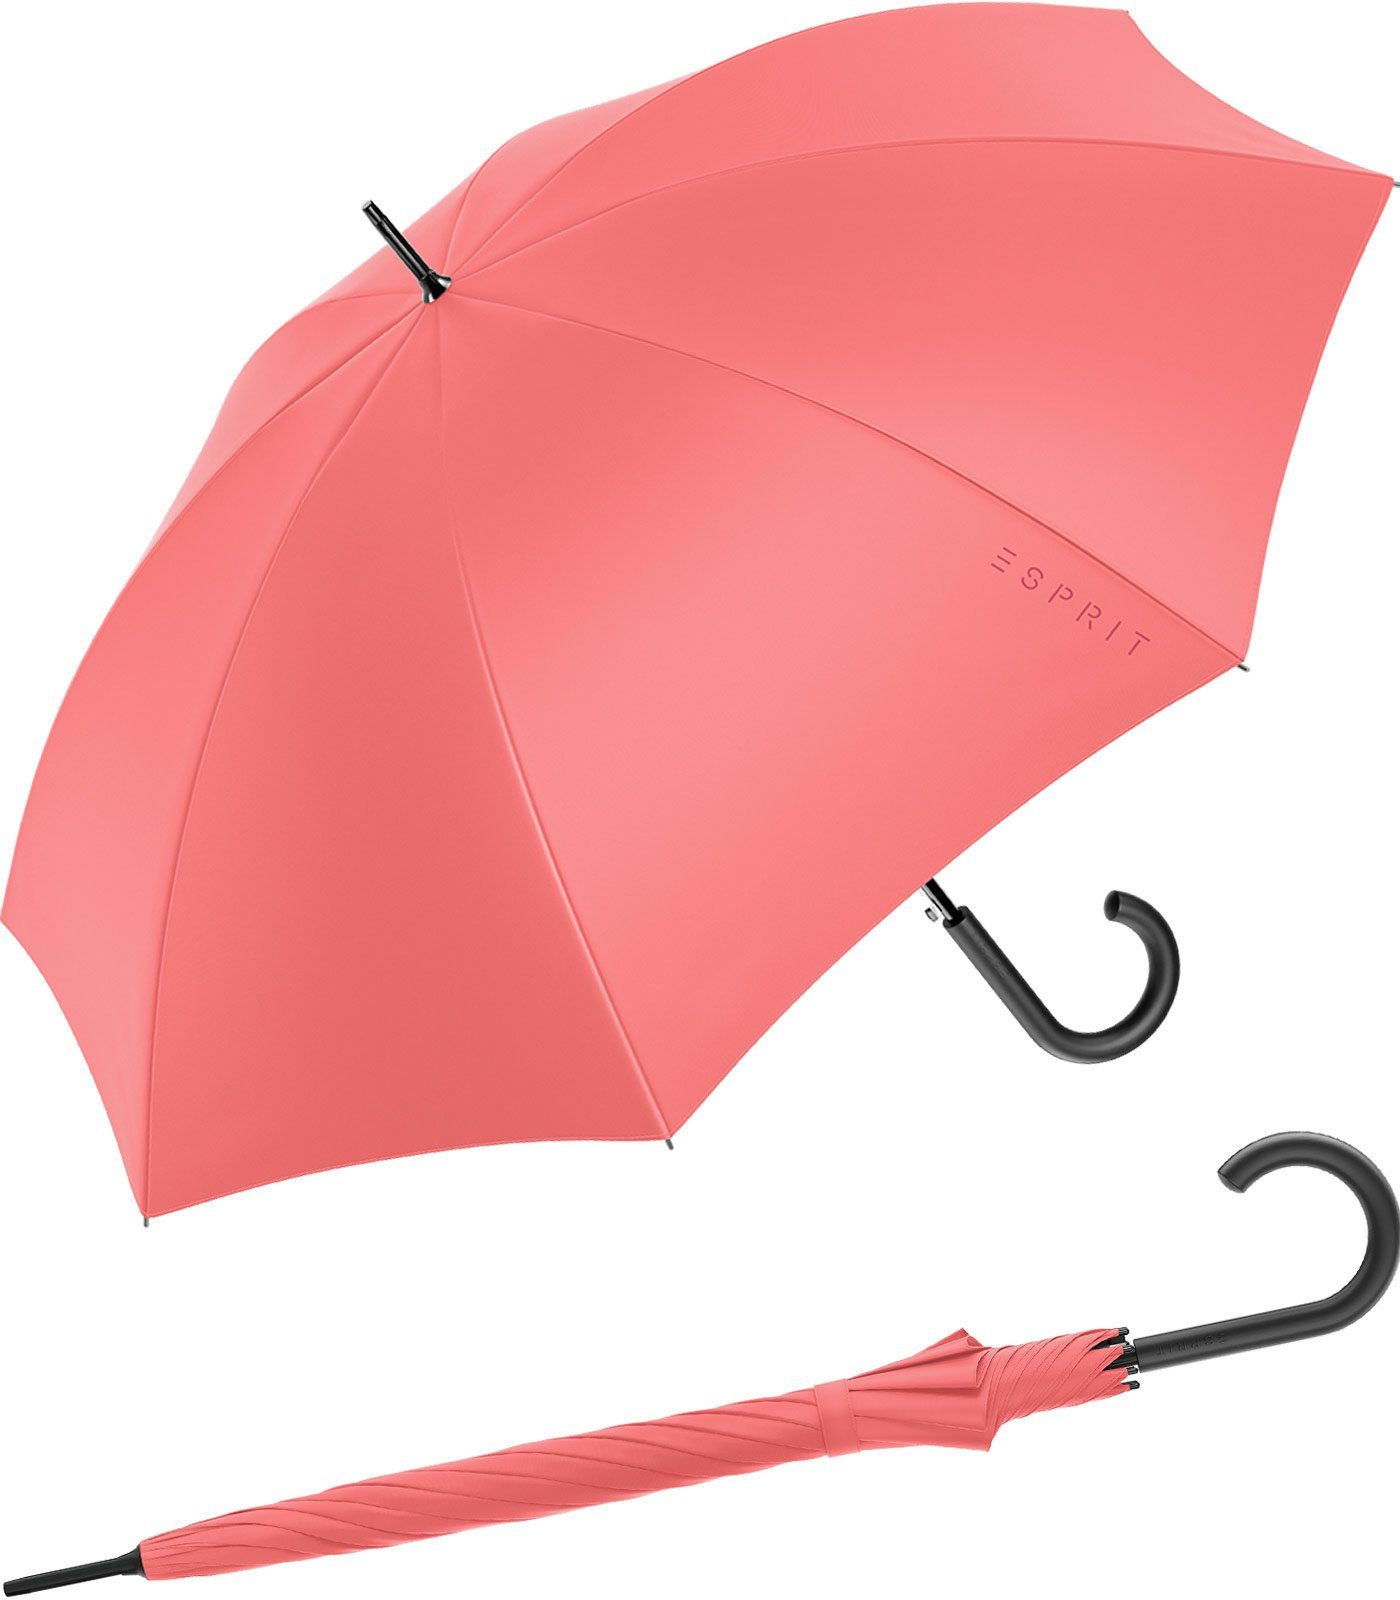 FJ den und mit groß Automatik in Langregenschirm stabil, Trendfarben Esprit 2023, Damen-Regenschirm koralle